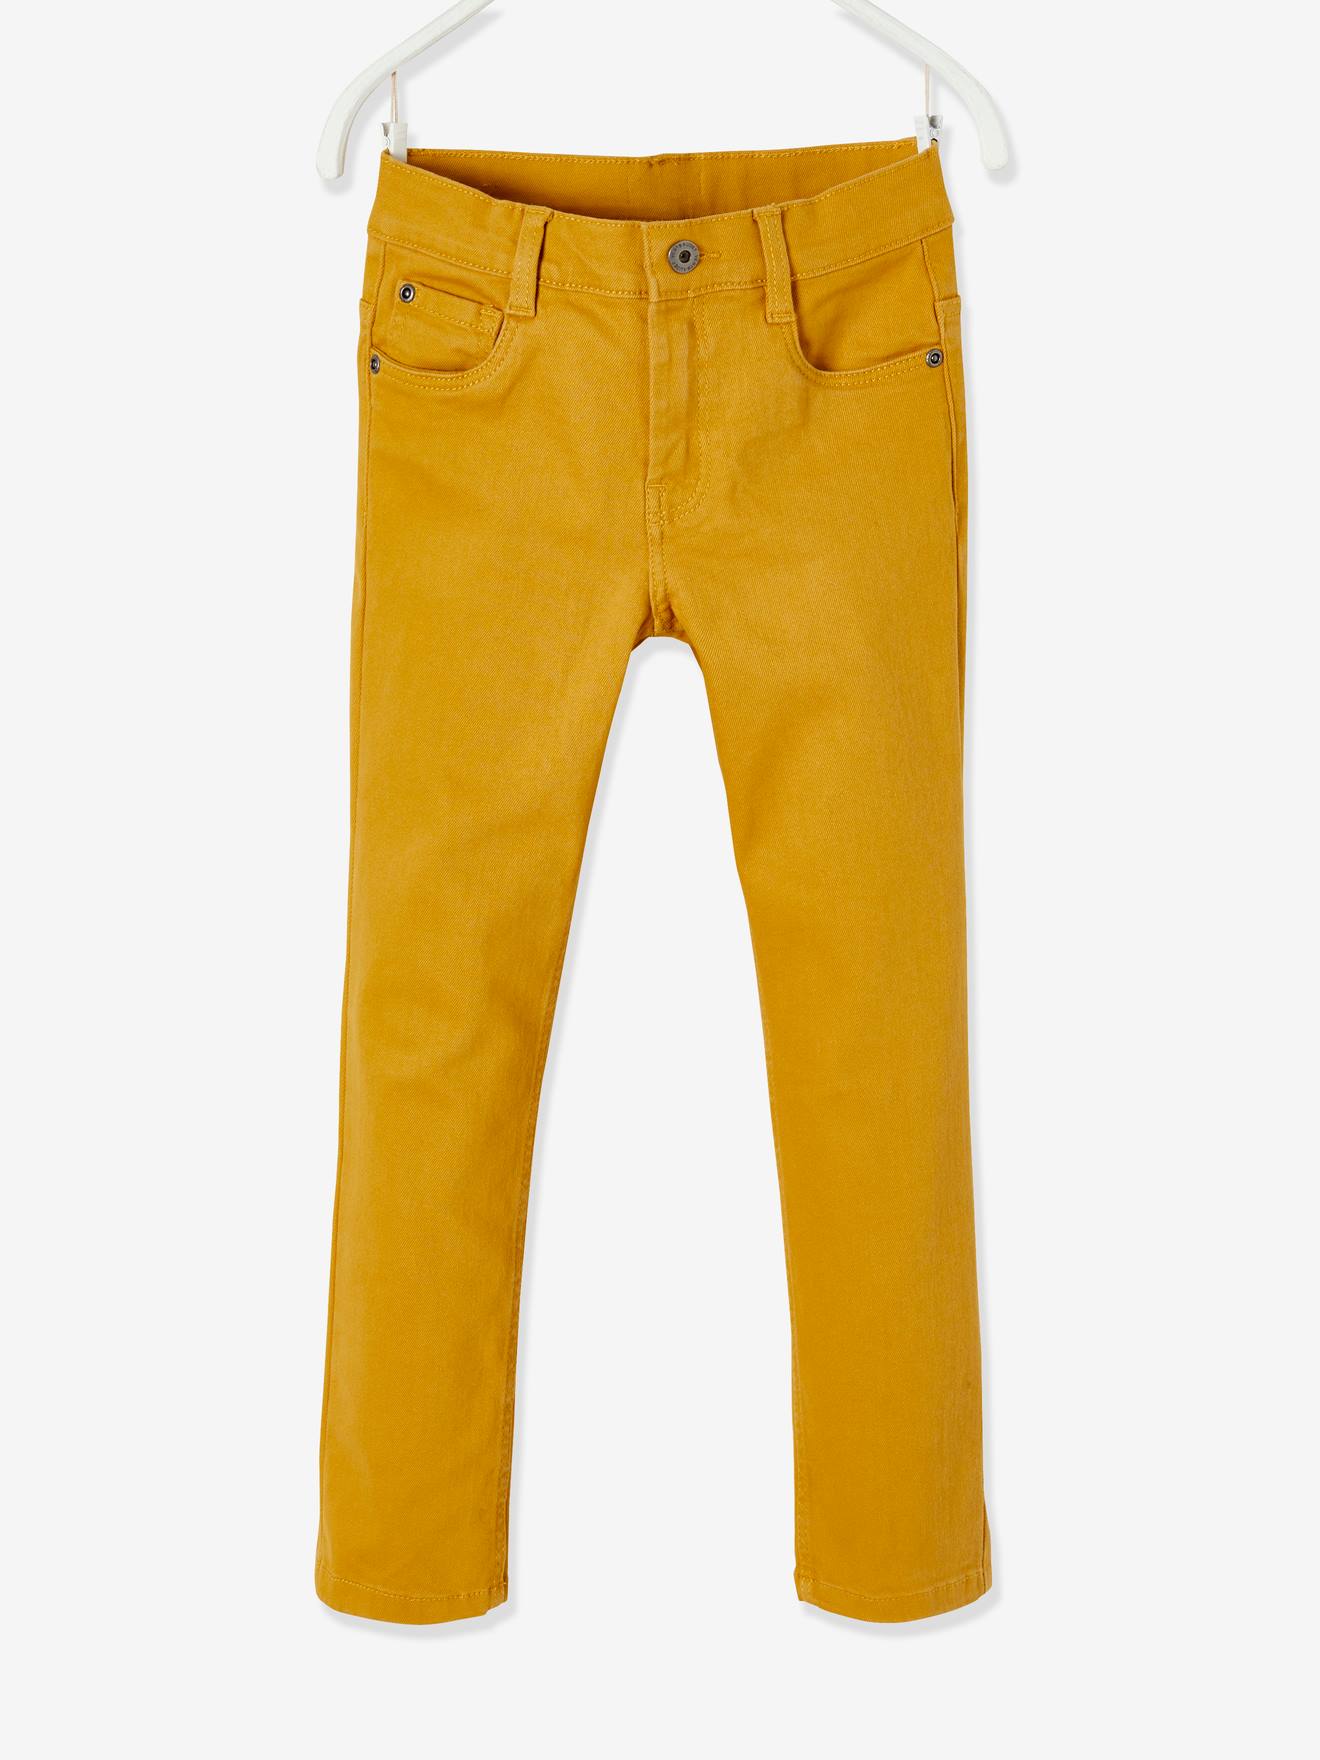 boys yellow jeans